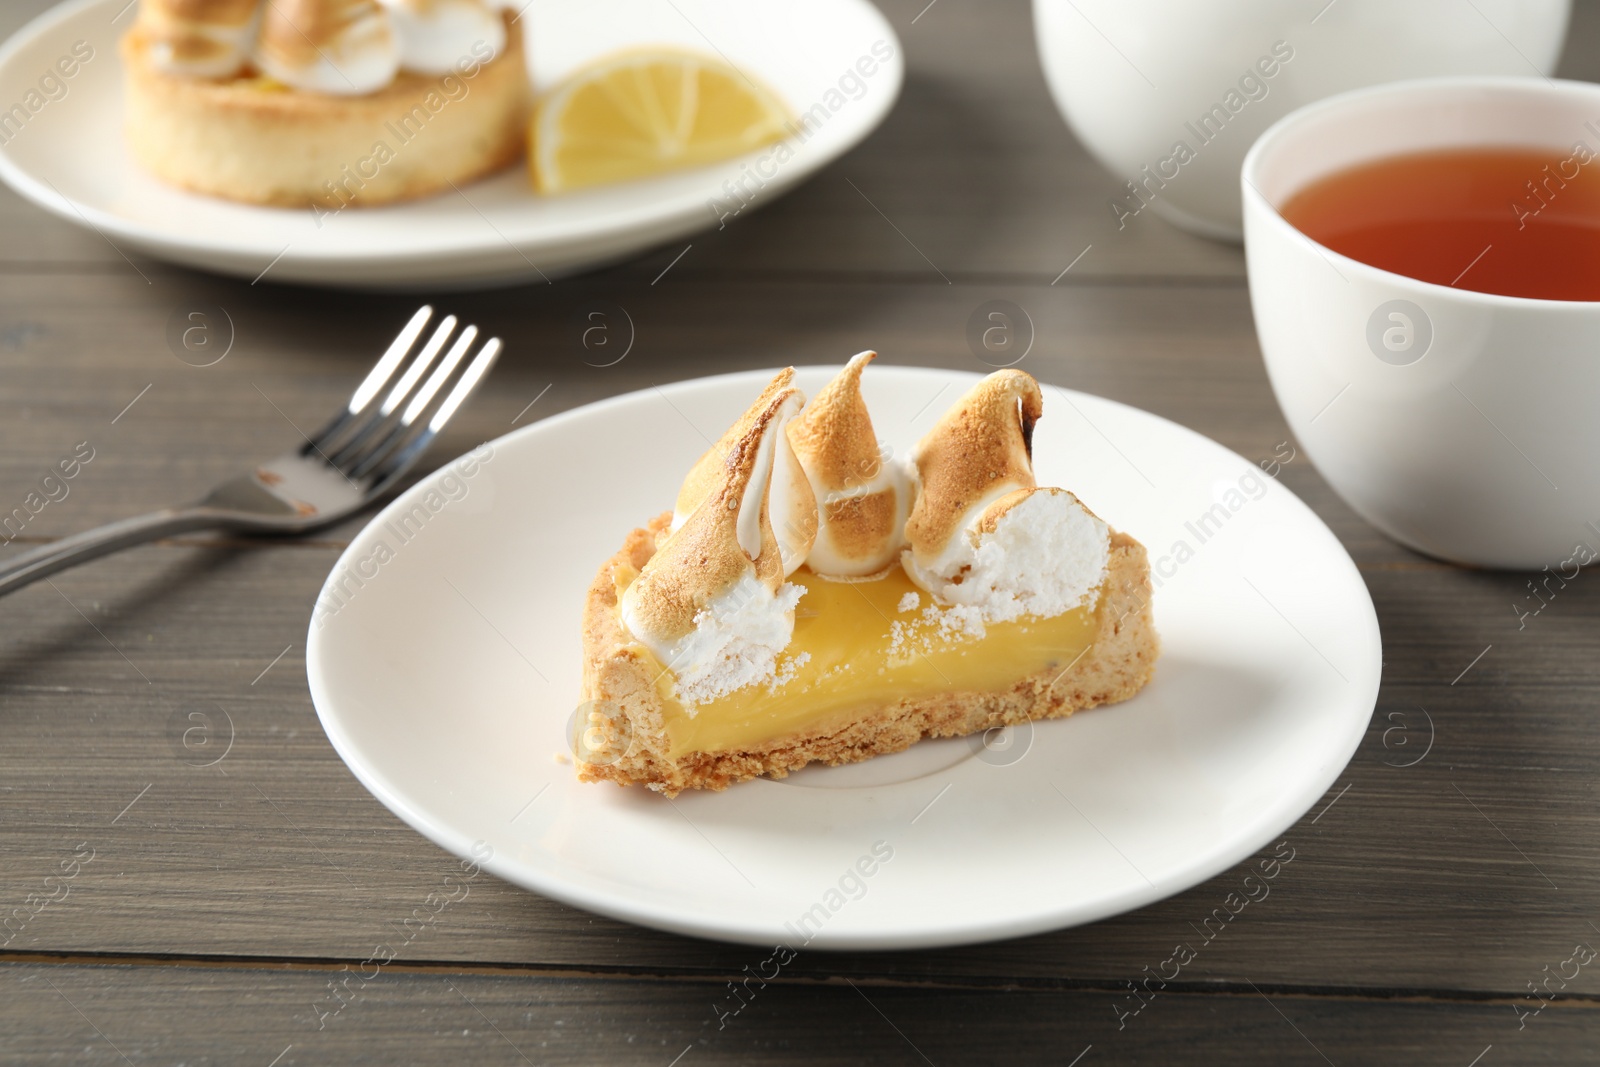 Photo of Piece of delicious lemon meringue pie on wooden table